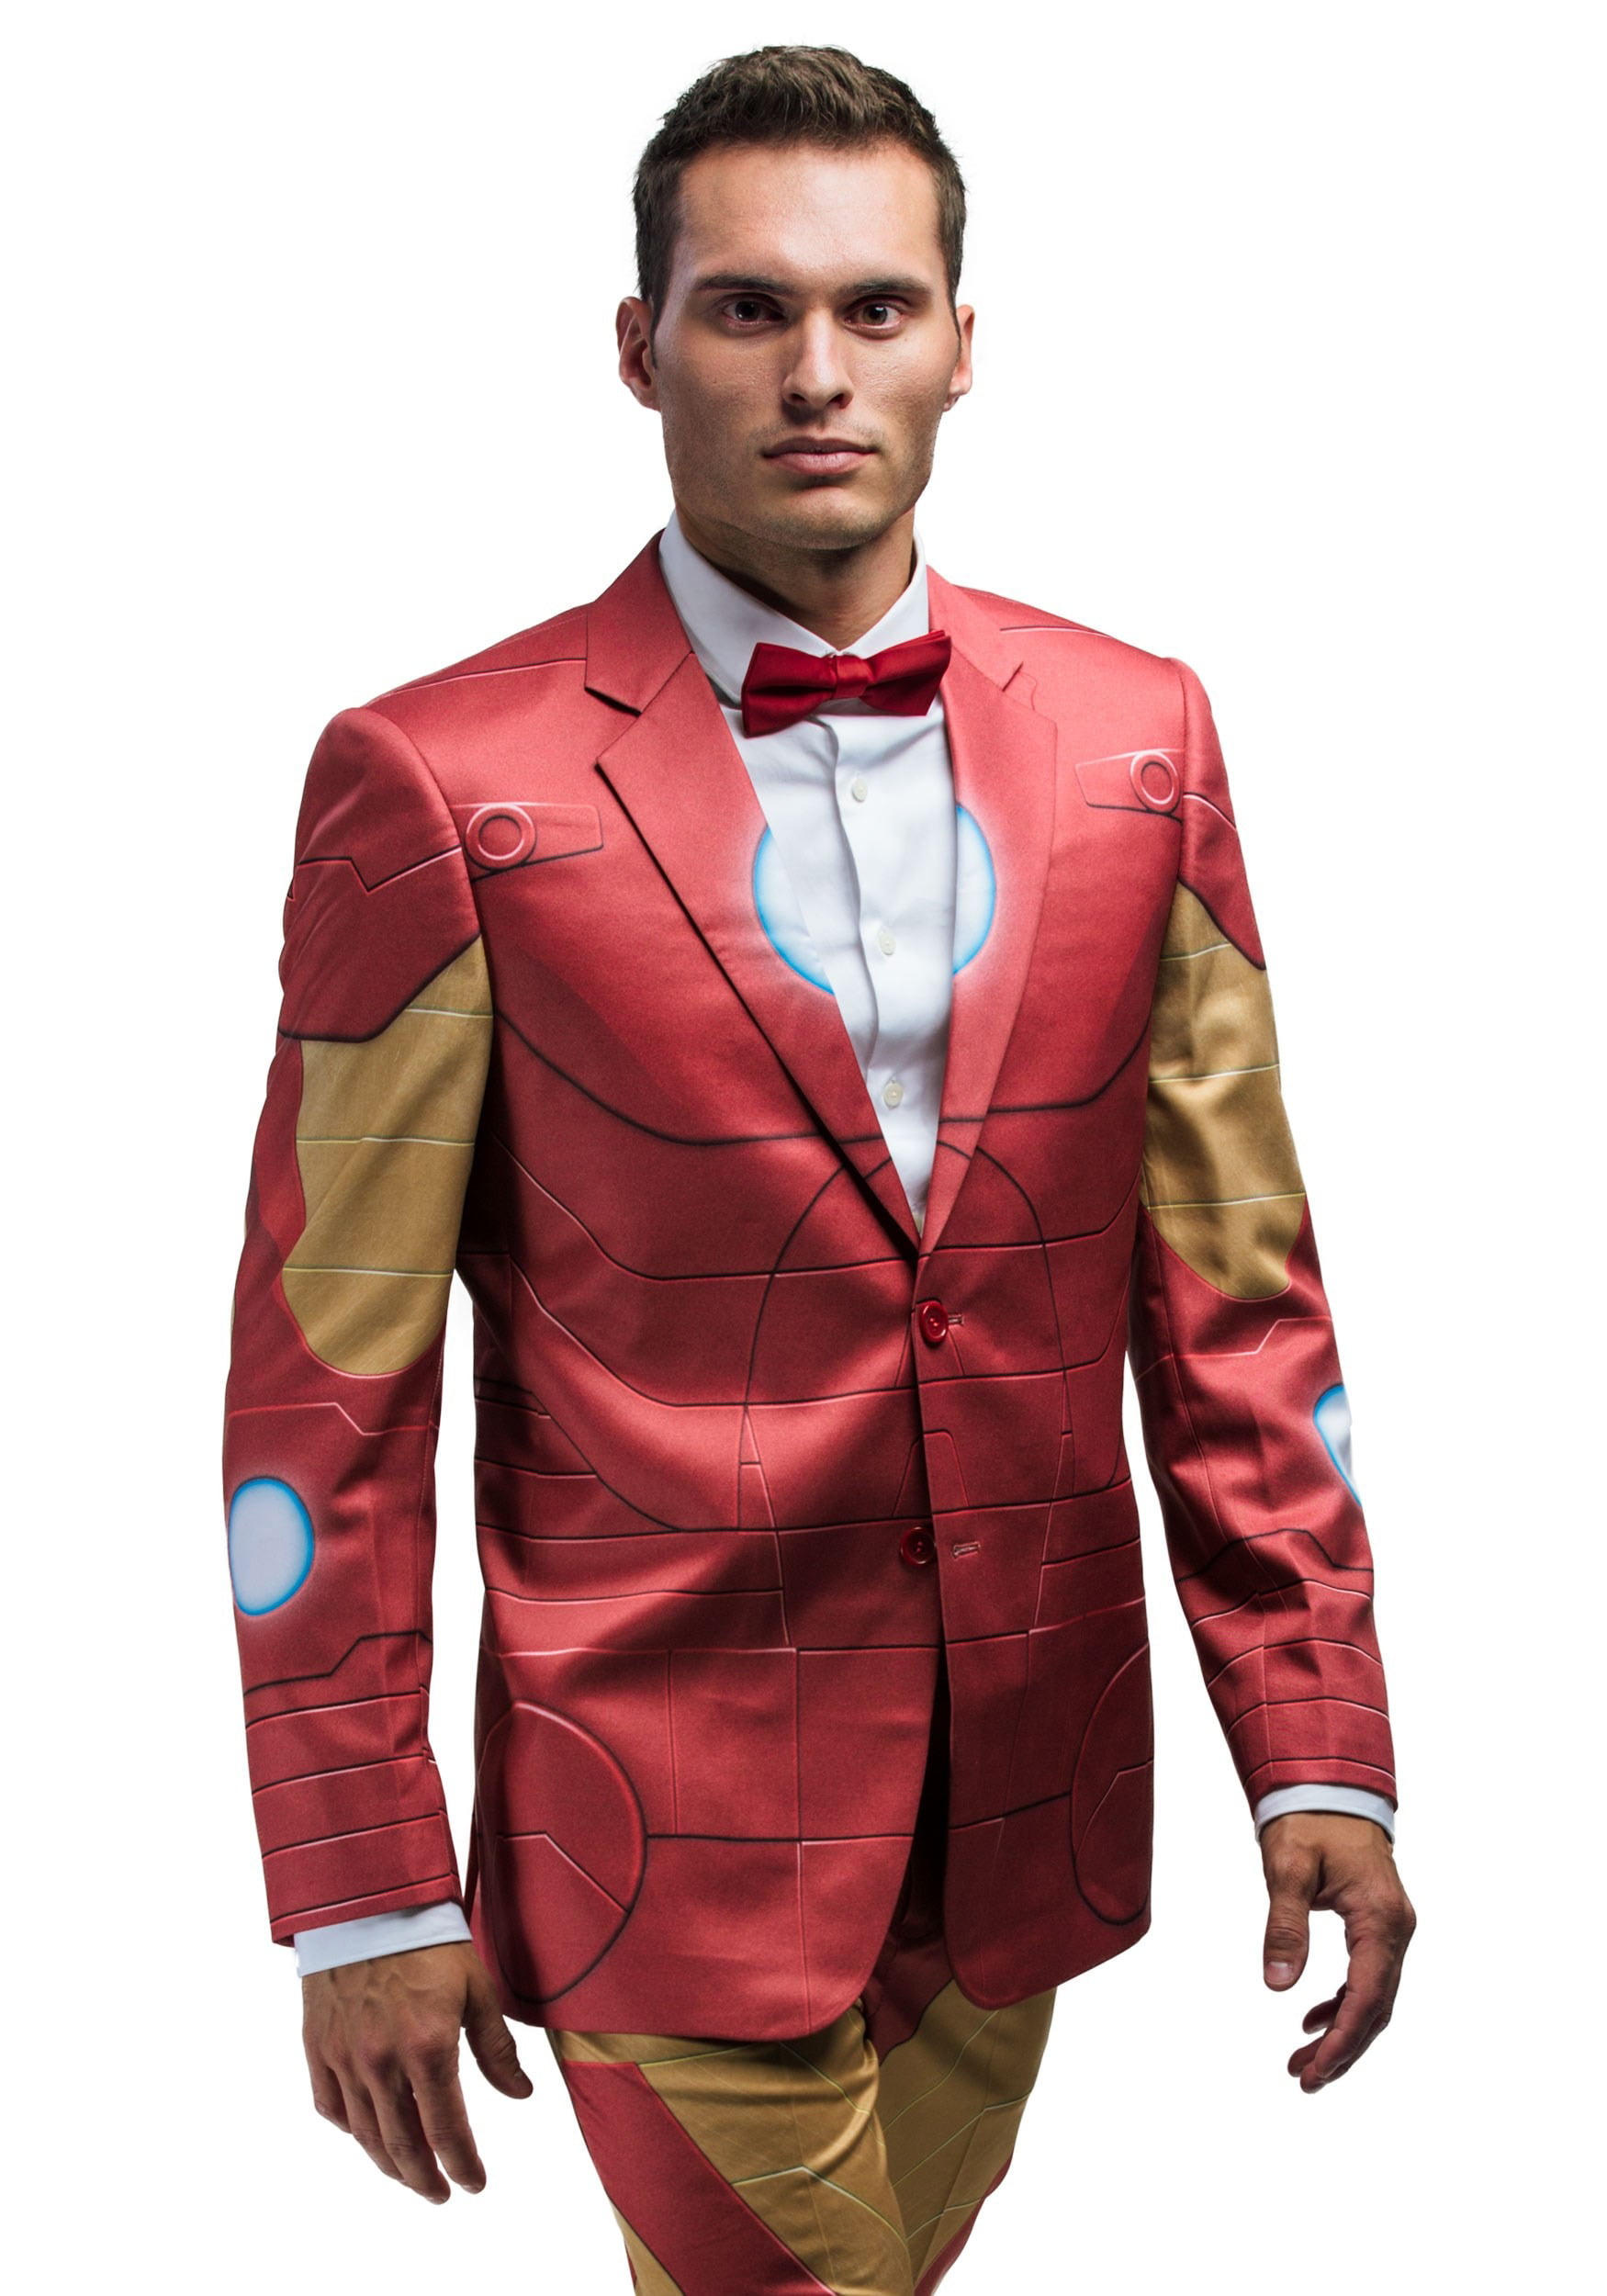 Fun Suits Iron Man Suit Jacket Alter Ego Walmart Com Walmart Com